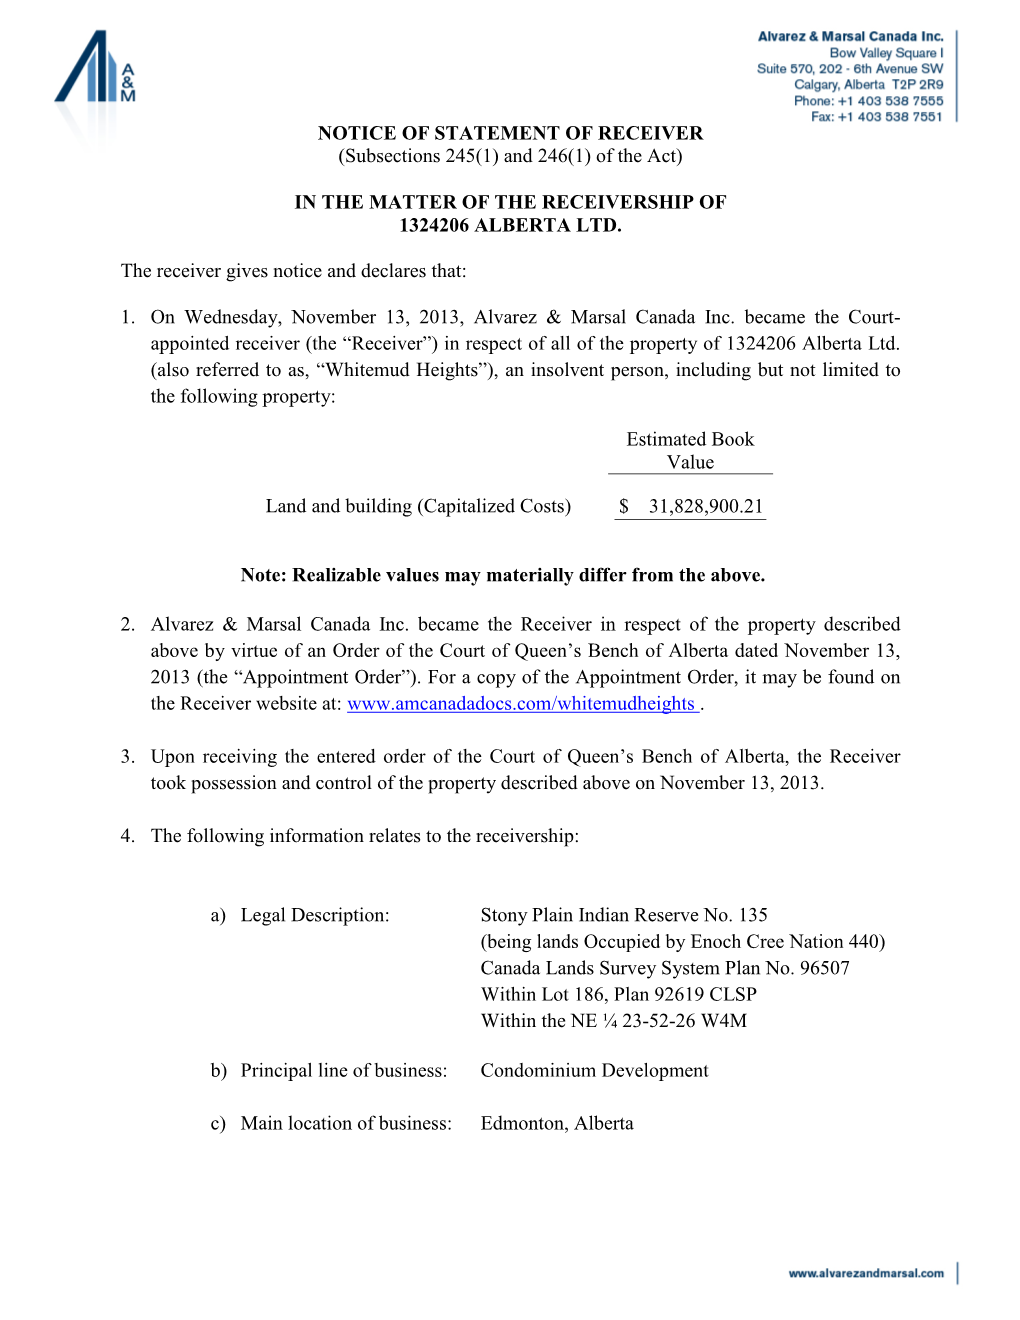 Notice of Statement of Receiver (November 13, 2013)